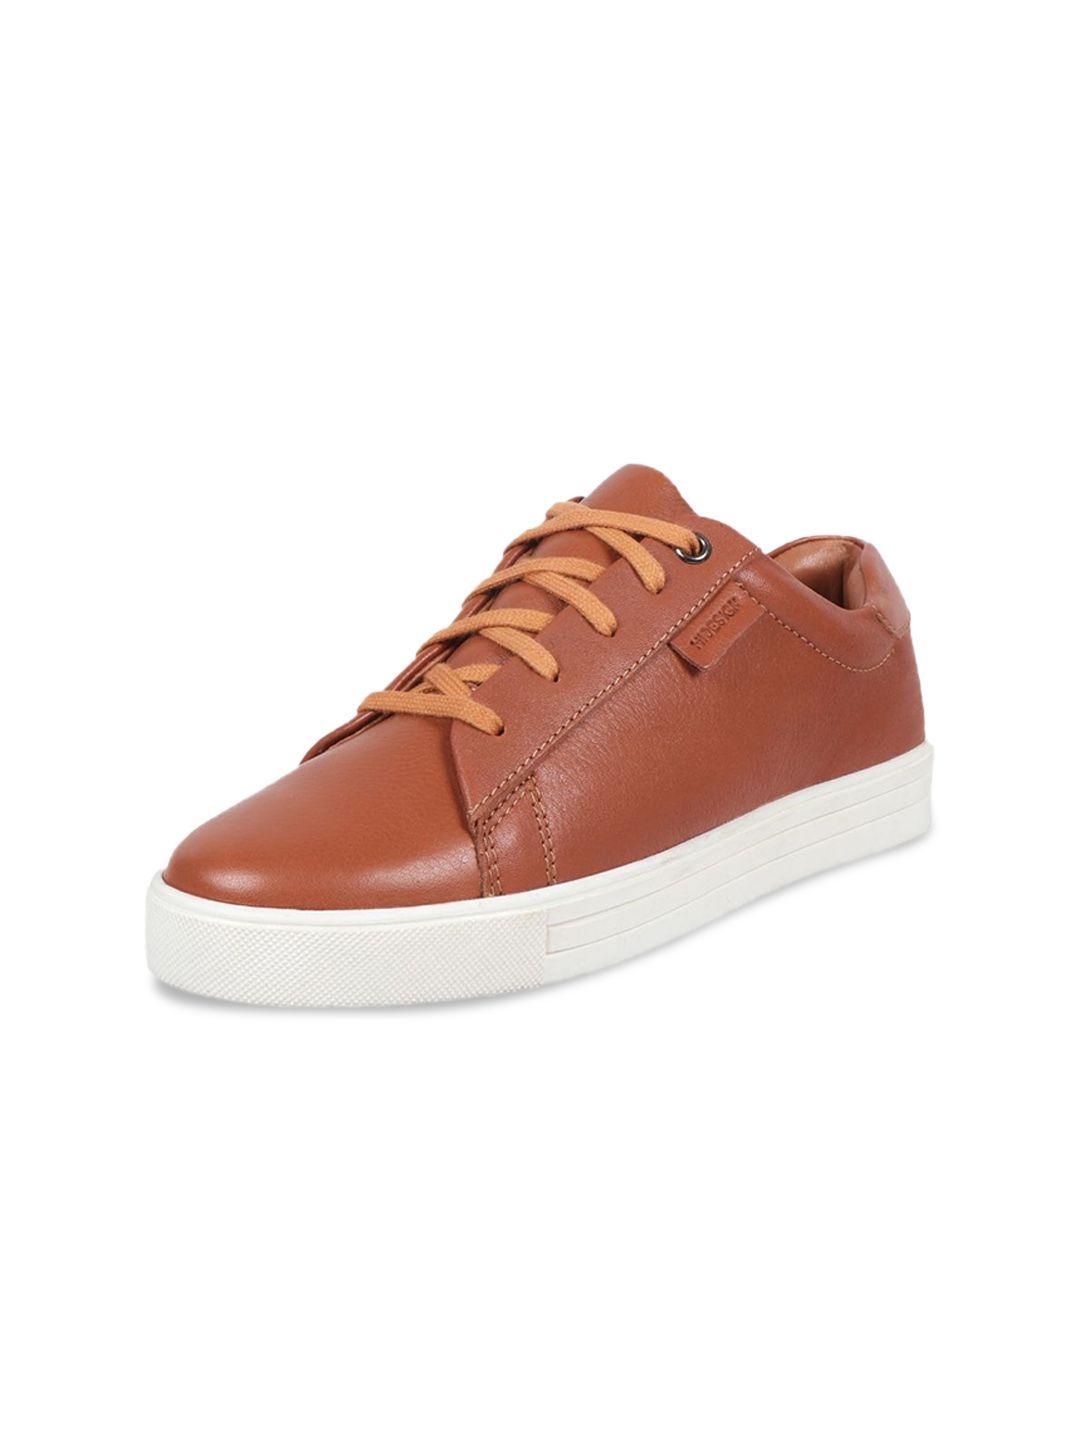 hidesign women kenya leather comfort insole contrast sole sneakers